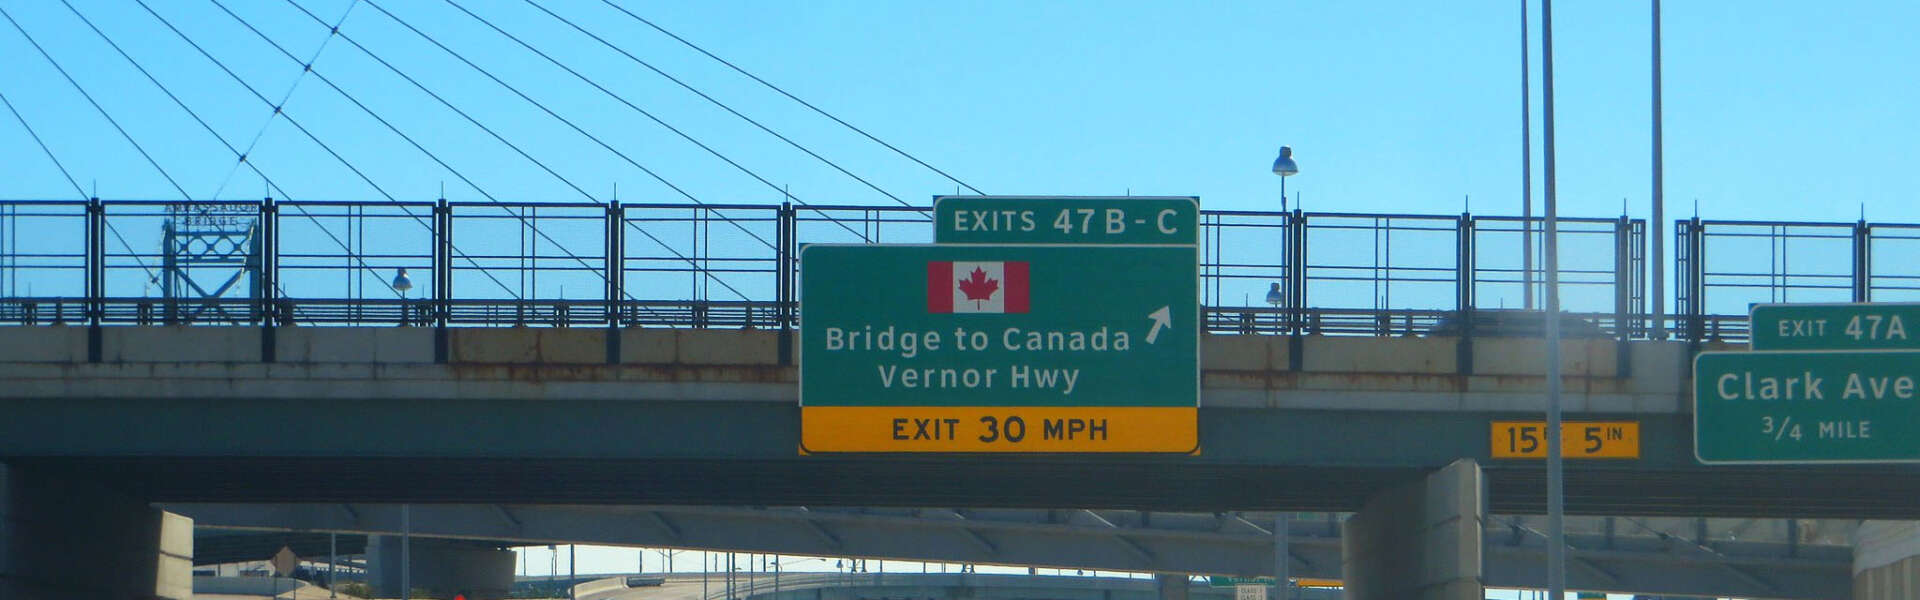 Signs for the Ambassador Bridge